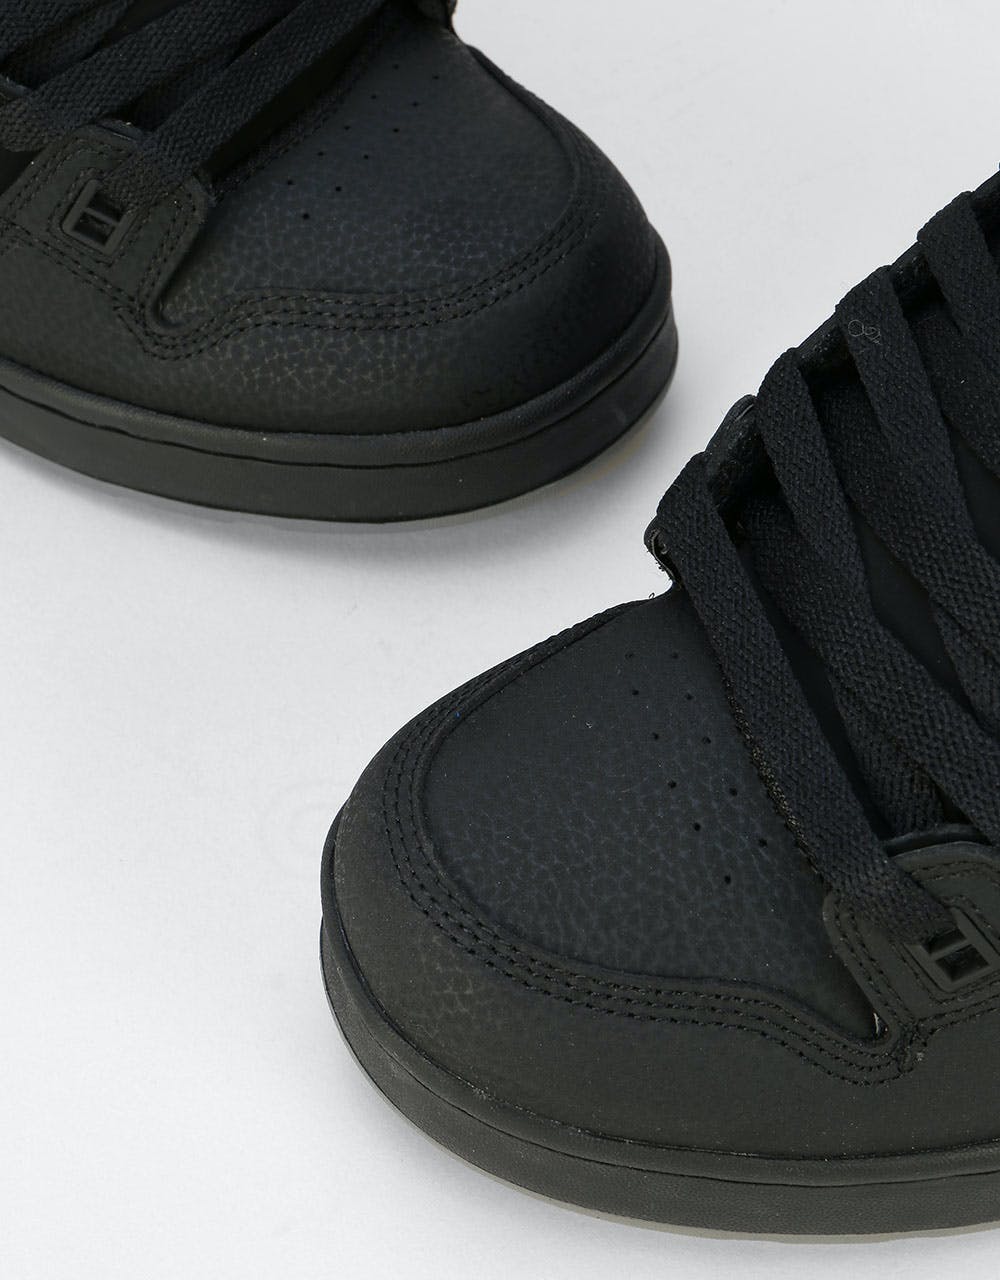 DVS Militia Snow Boot - Black/Camo Leather